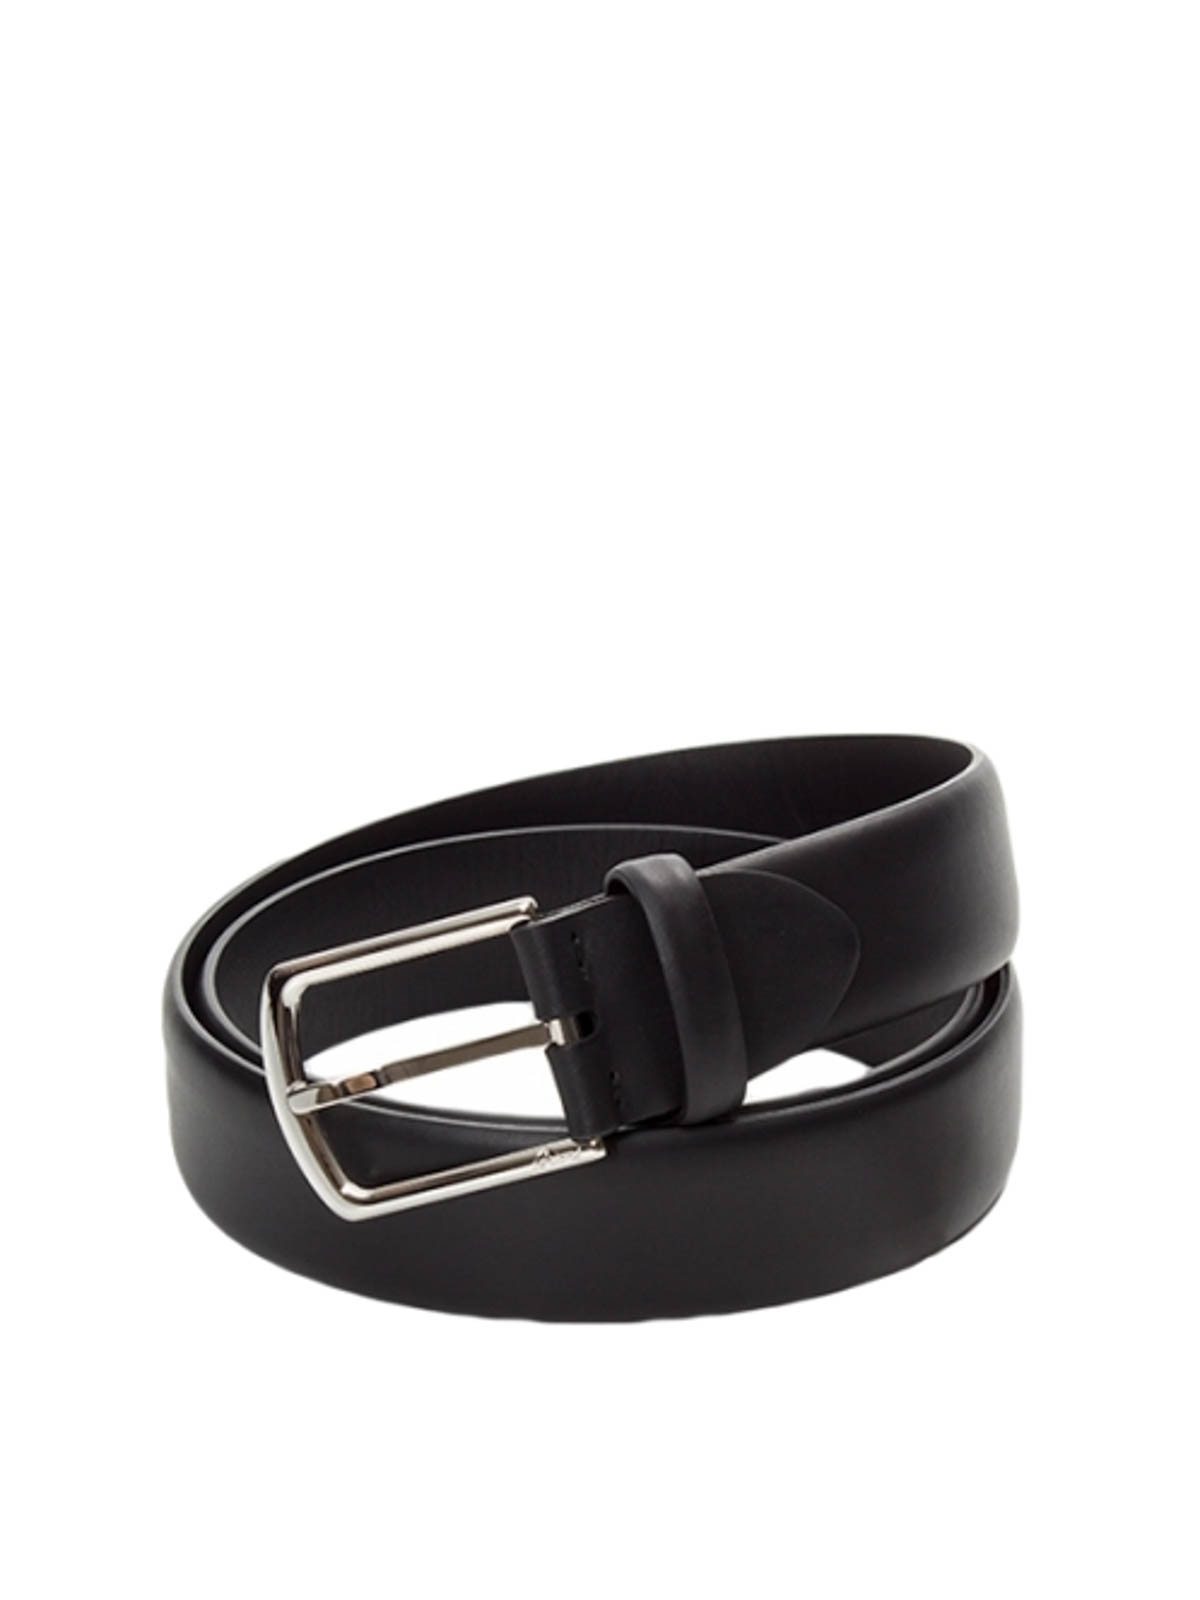 Belts Brioni - Calf leather belt - B02TH12 | Shop online at iKRIX